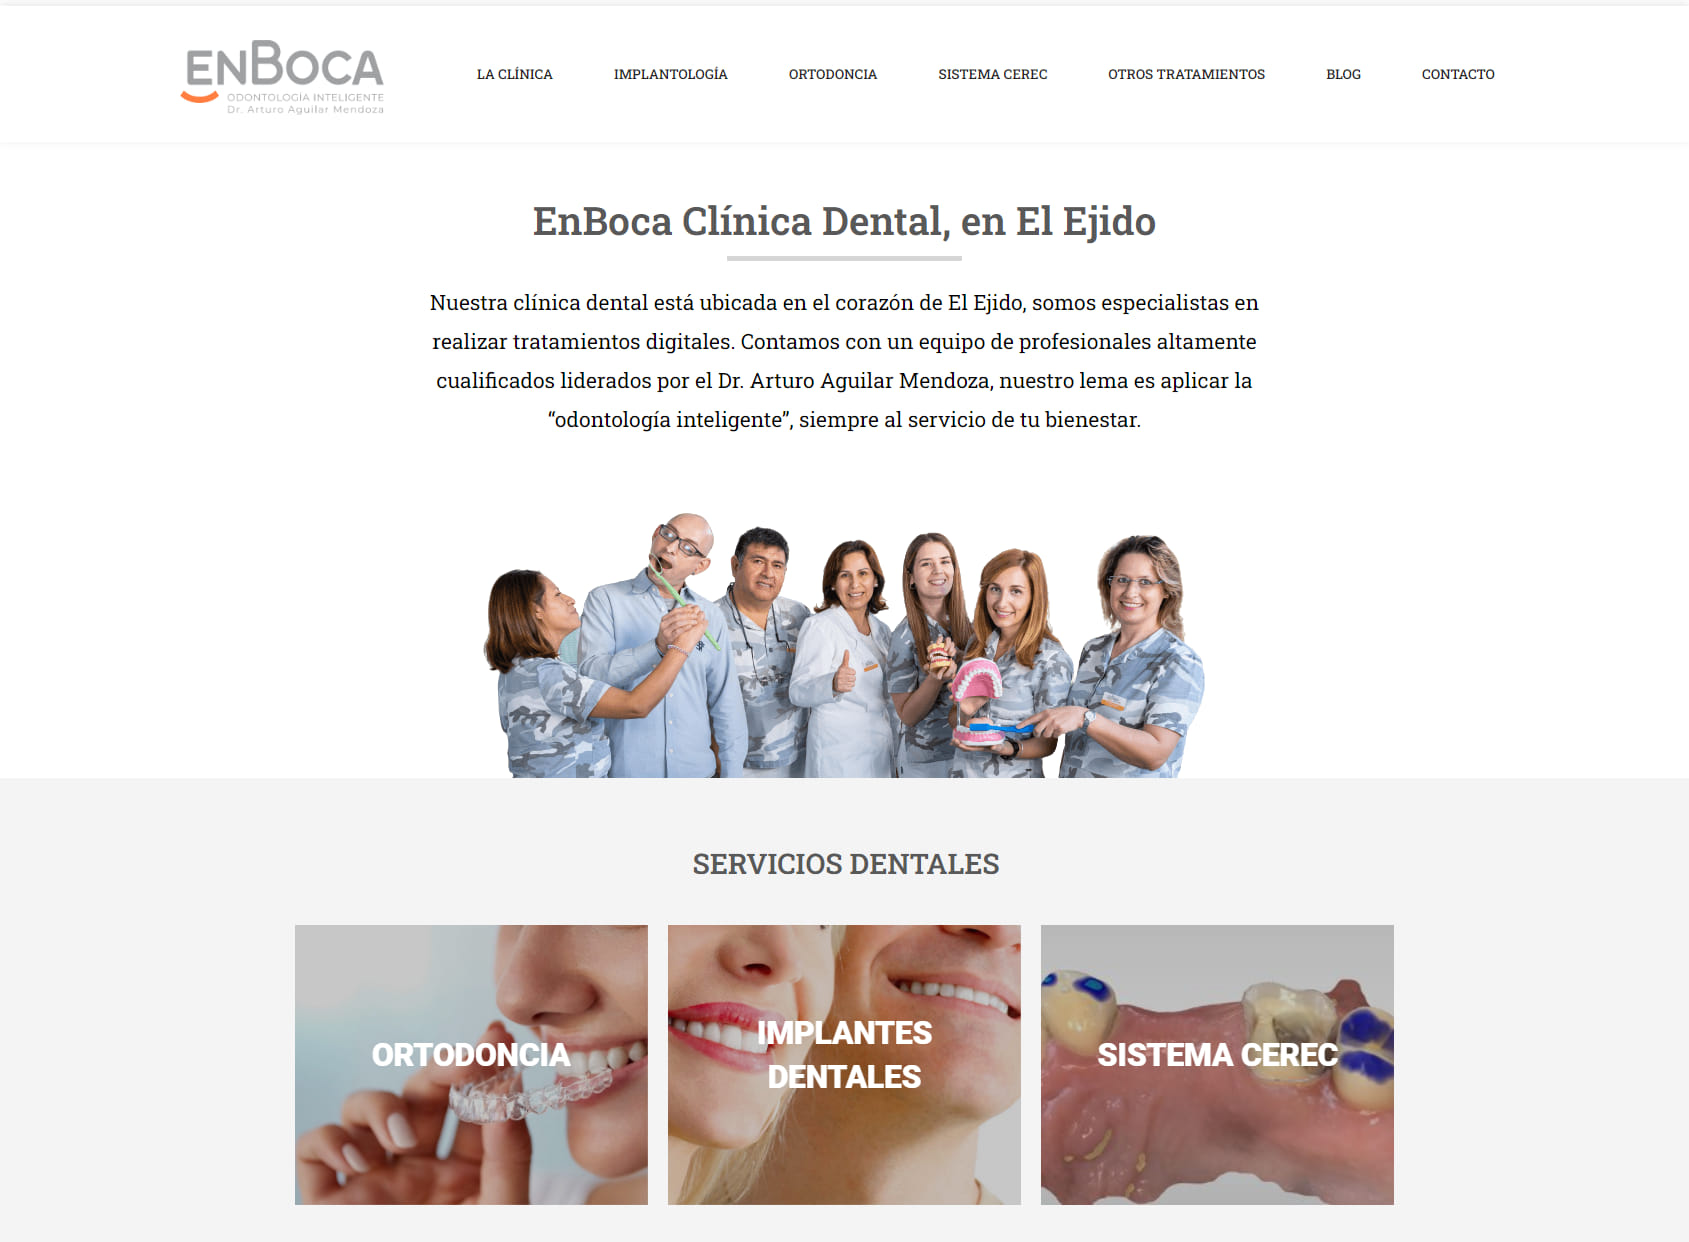 EnBoca Clínica Dental El Ejido - Dr. Arturo Aguilar